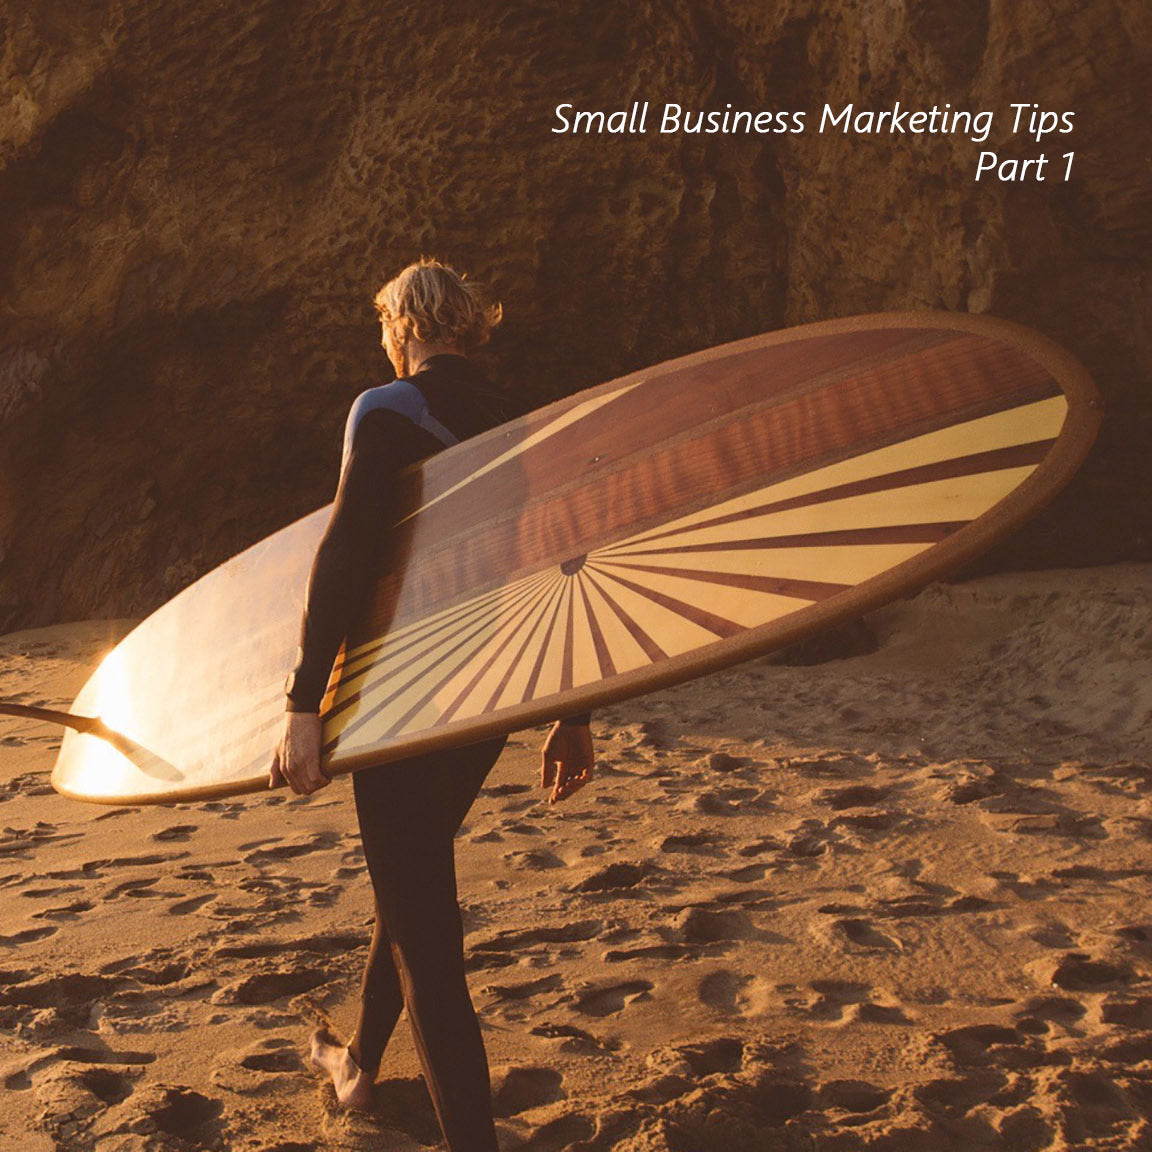 5 Small Business Marketing Tips from Ventana - Ventana Surfboards & Supplies